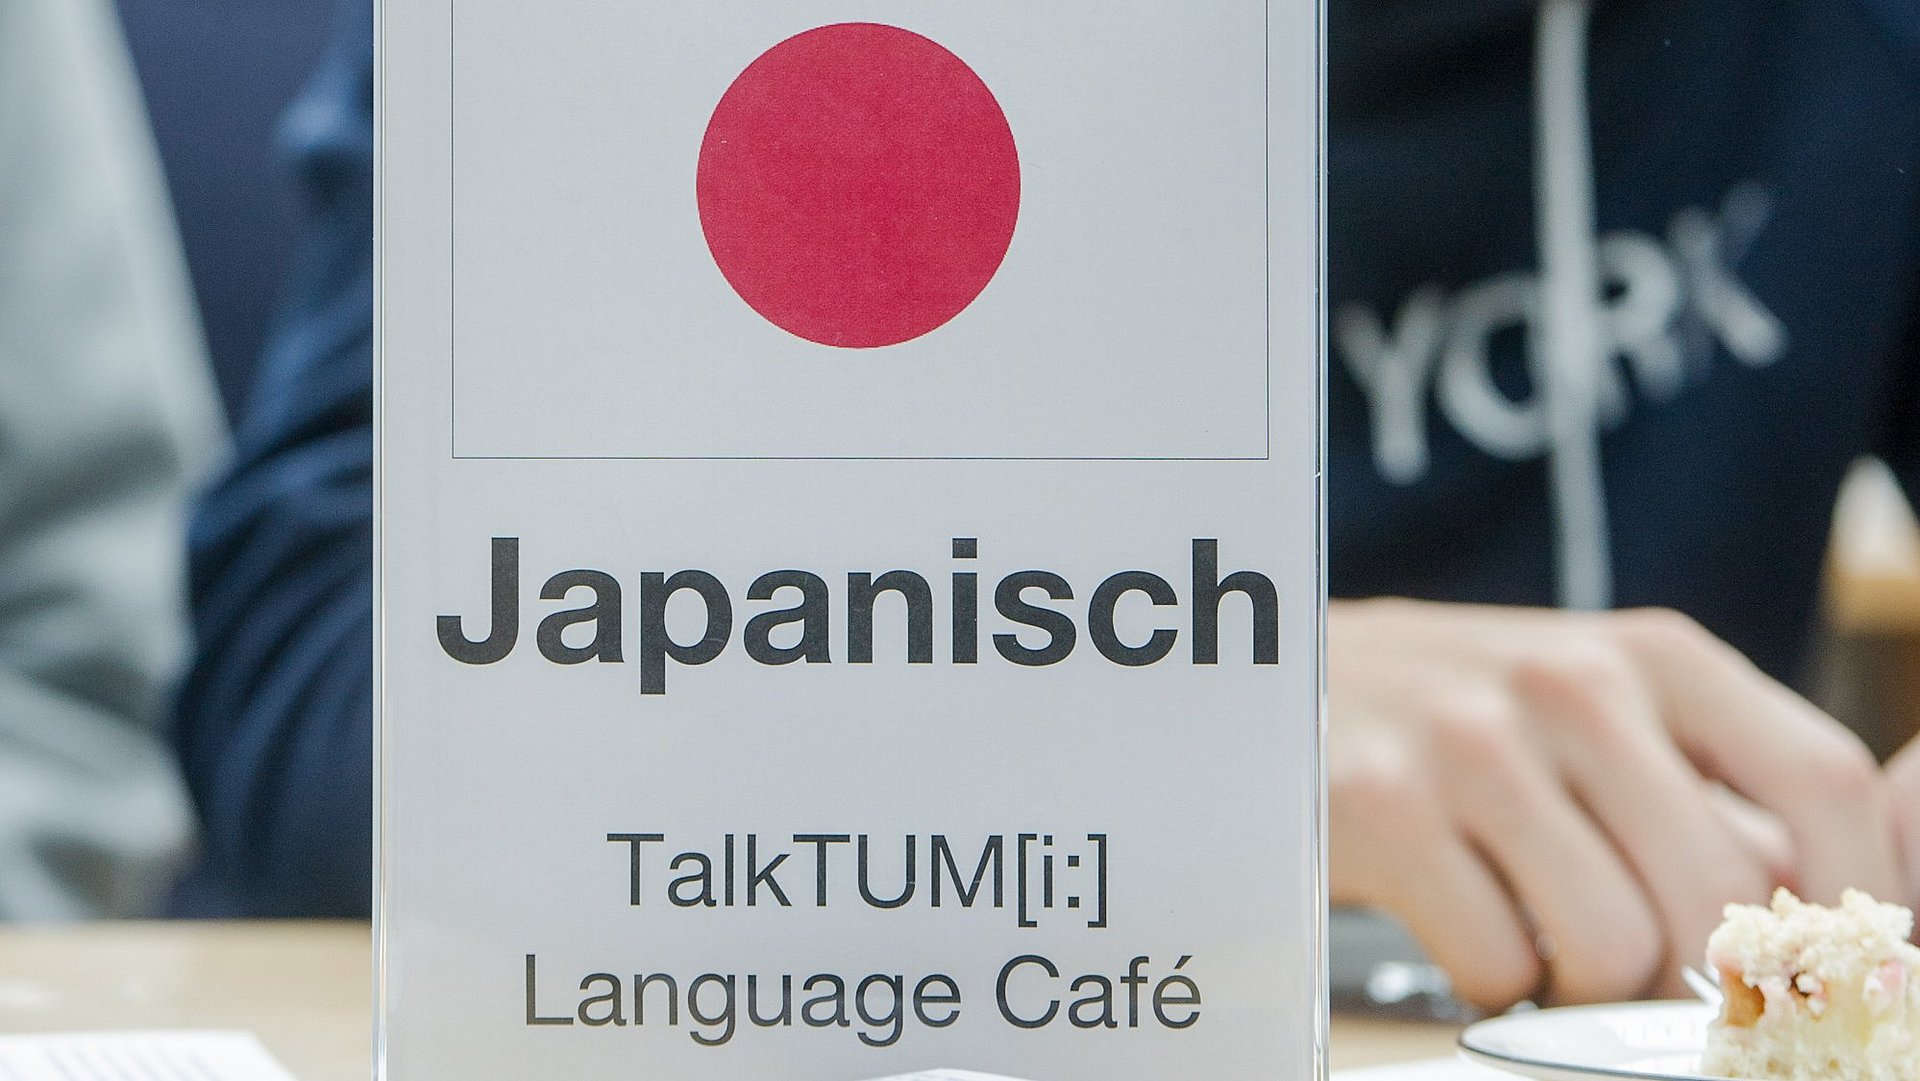 TUM language café Japanese